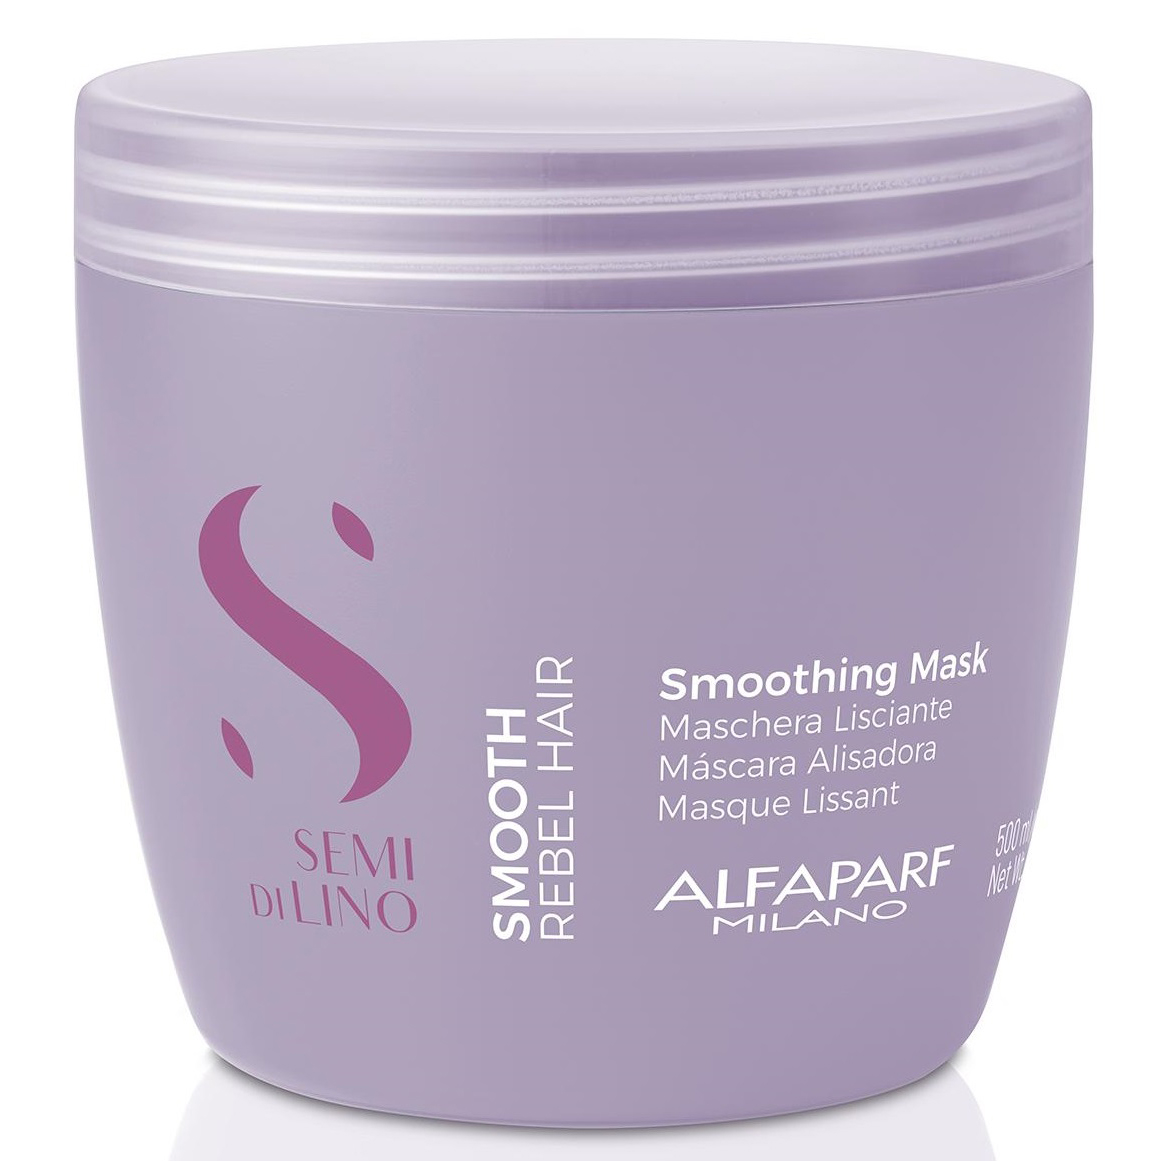 Alfaparf Milano Разглаживающая маска для непослушных волос, 500 мл (Alfaparf Milano, SDL Smoothing) стайлер cantu smooth для густых волос